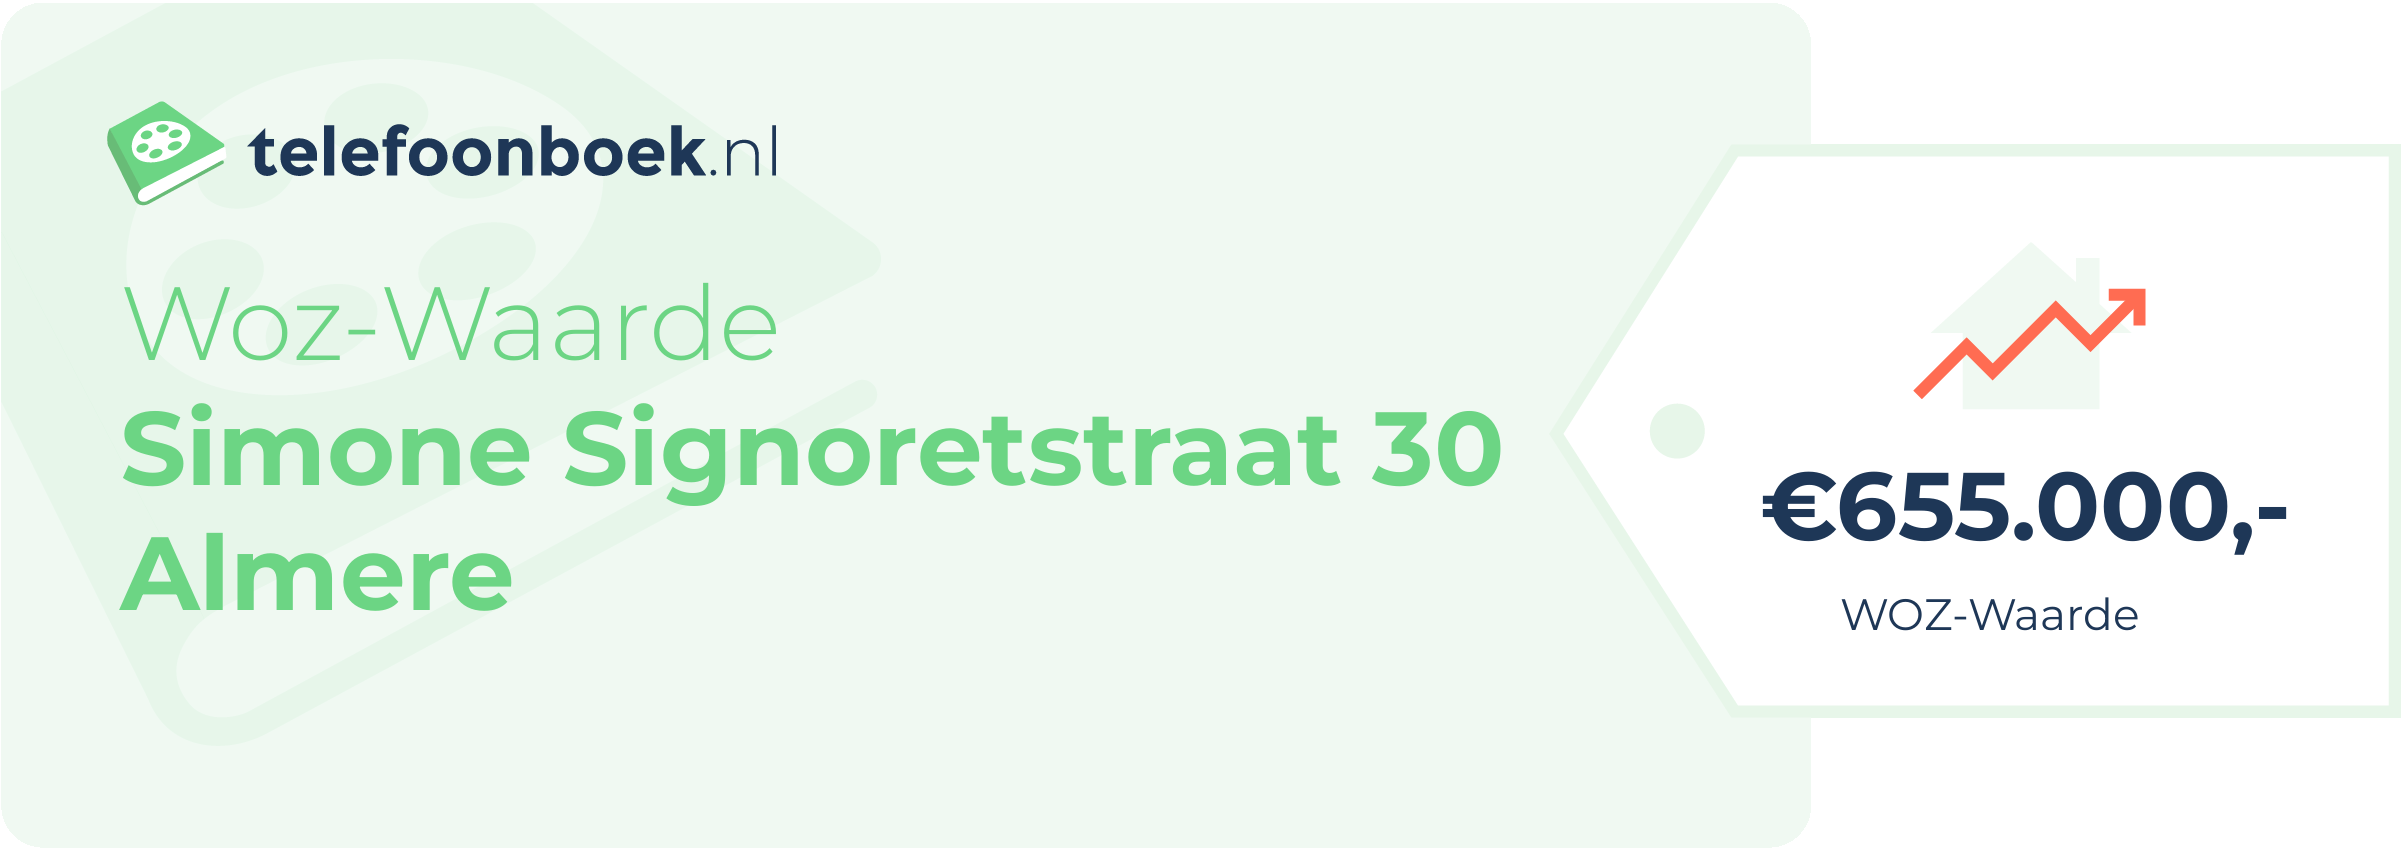 WOZ-waarde Simone Signoretstraat 30 Almere